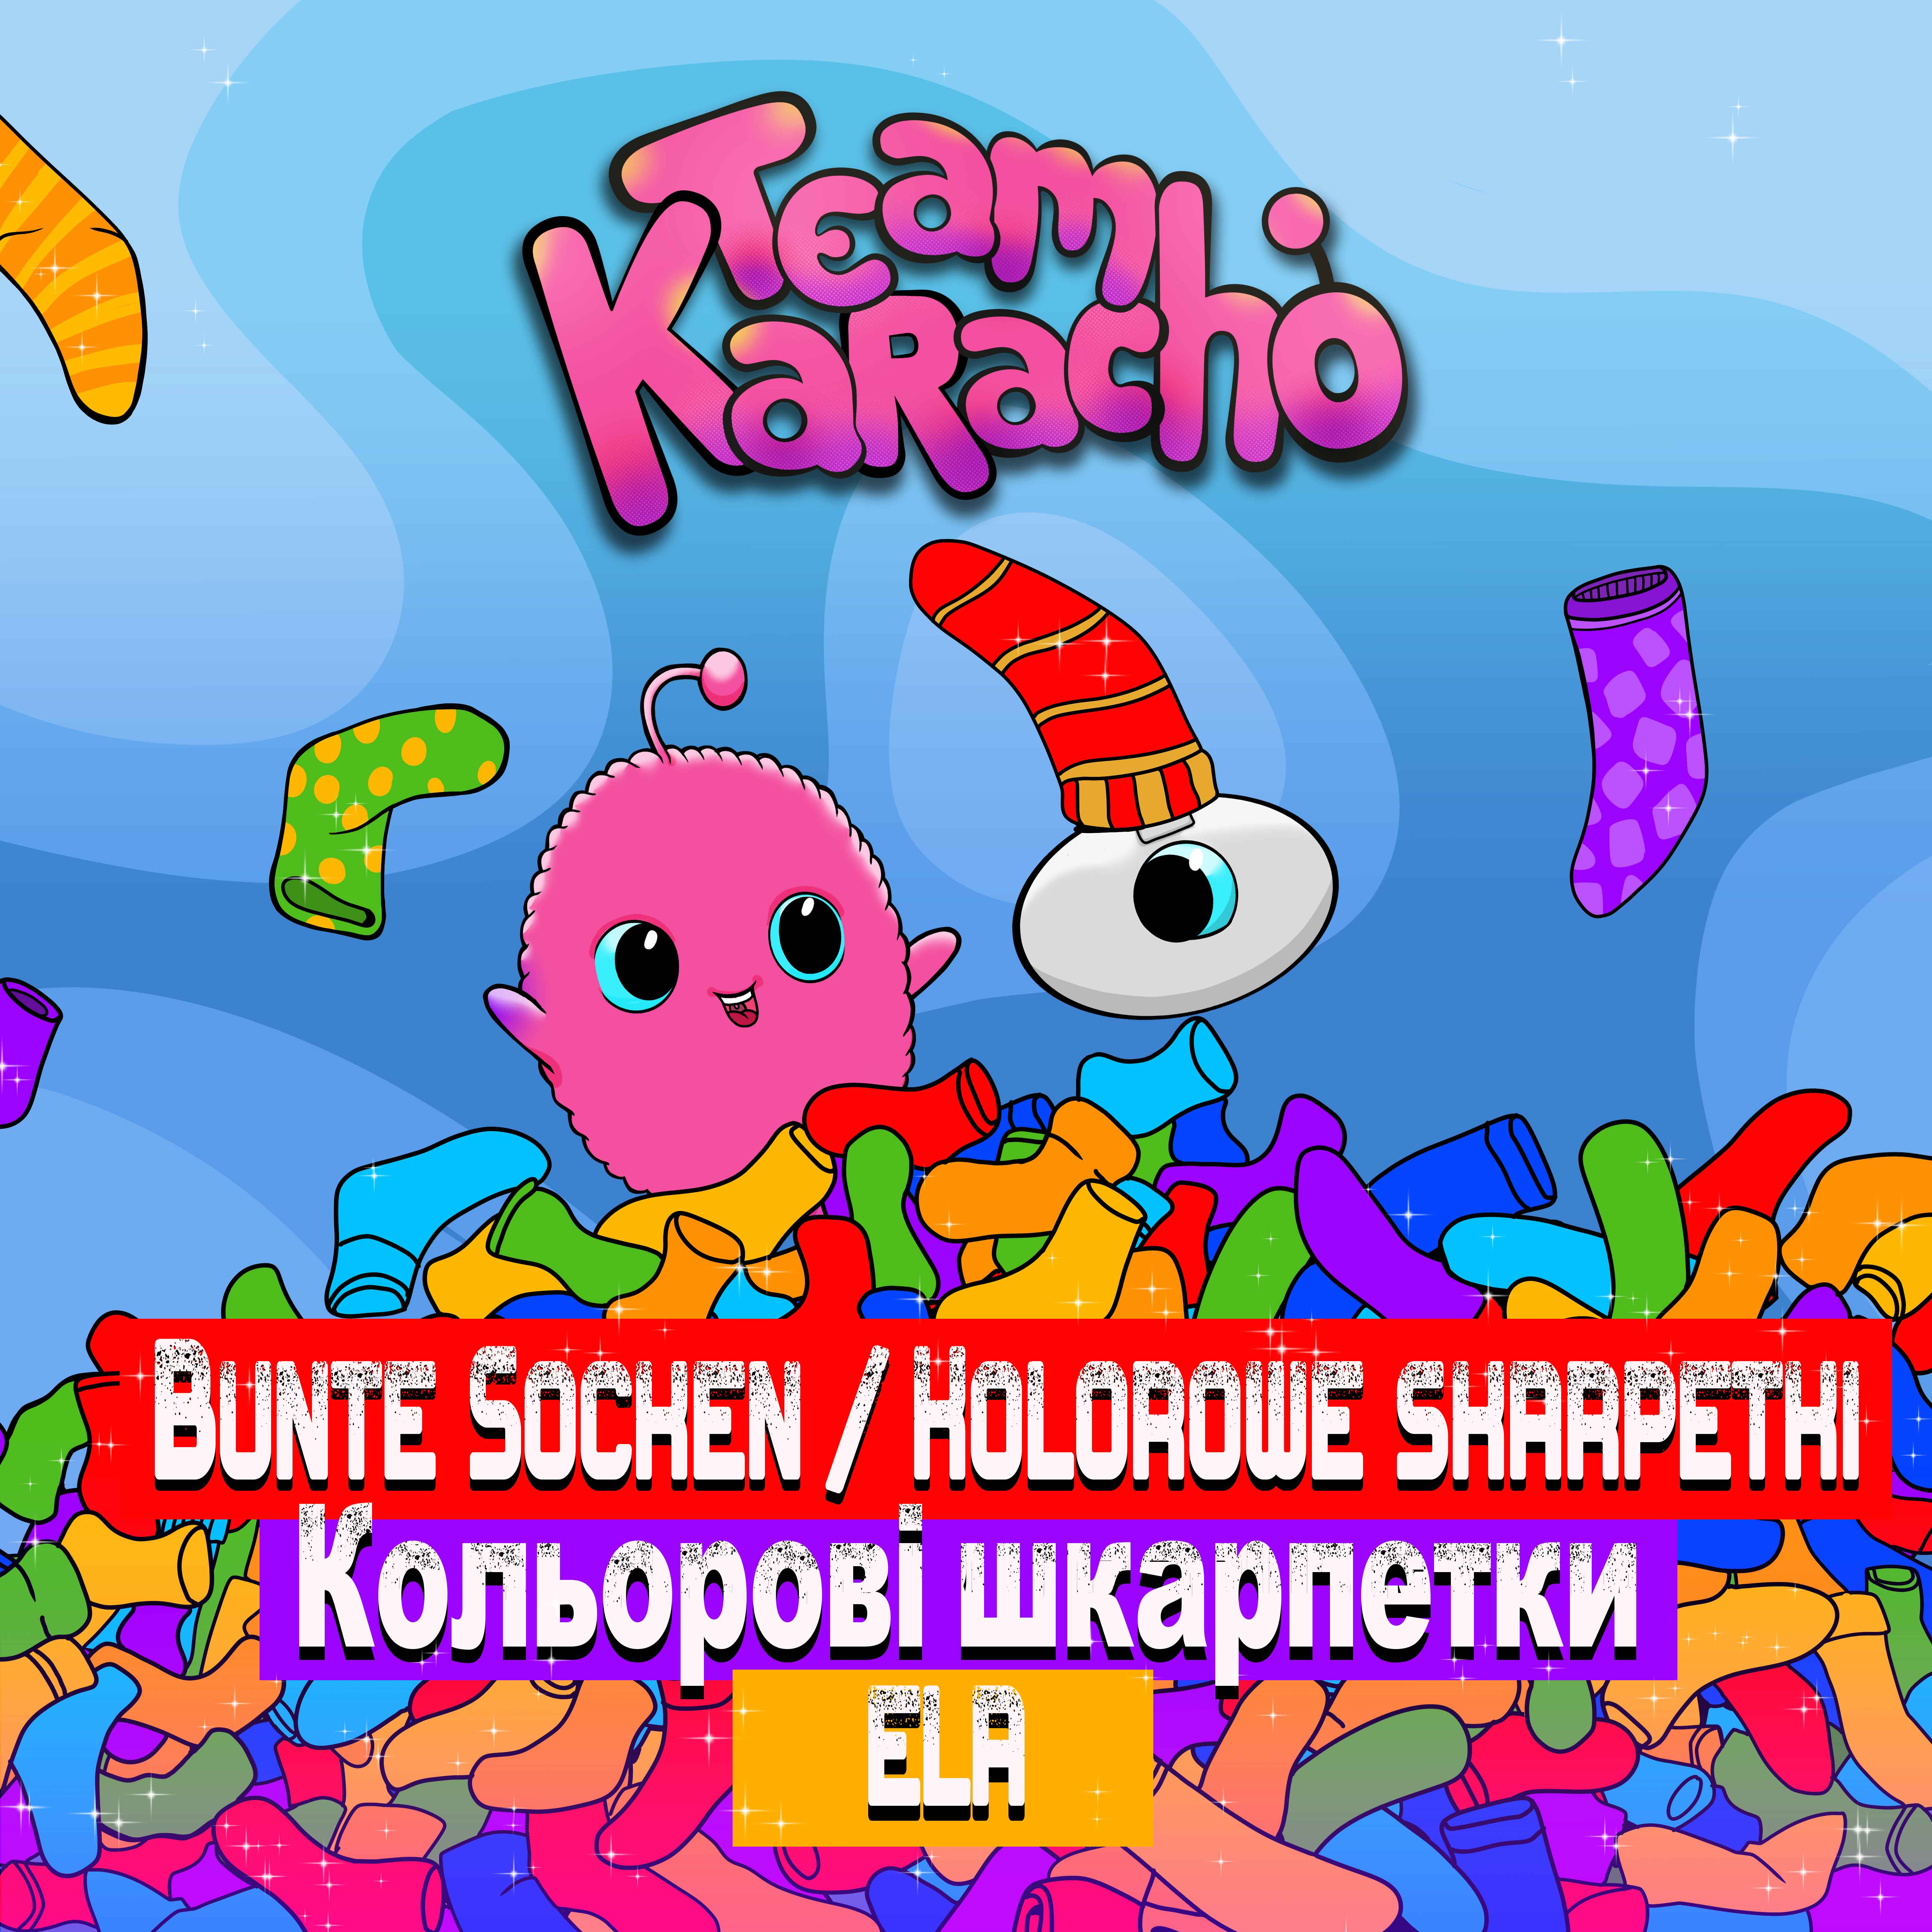 Team Karacho: Bunte Socken / Kolorowe skarpetki / Кольорові шкарпетки